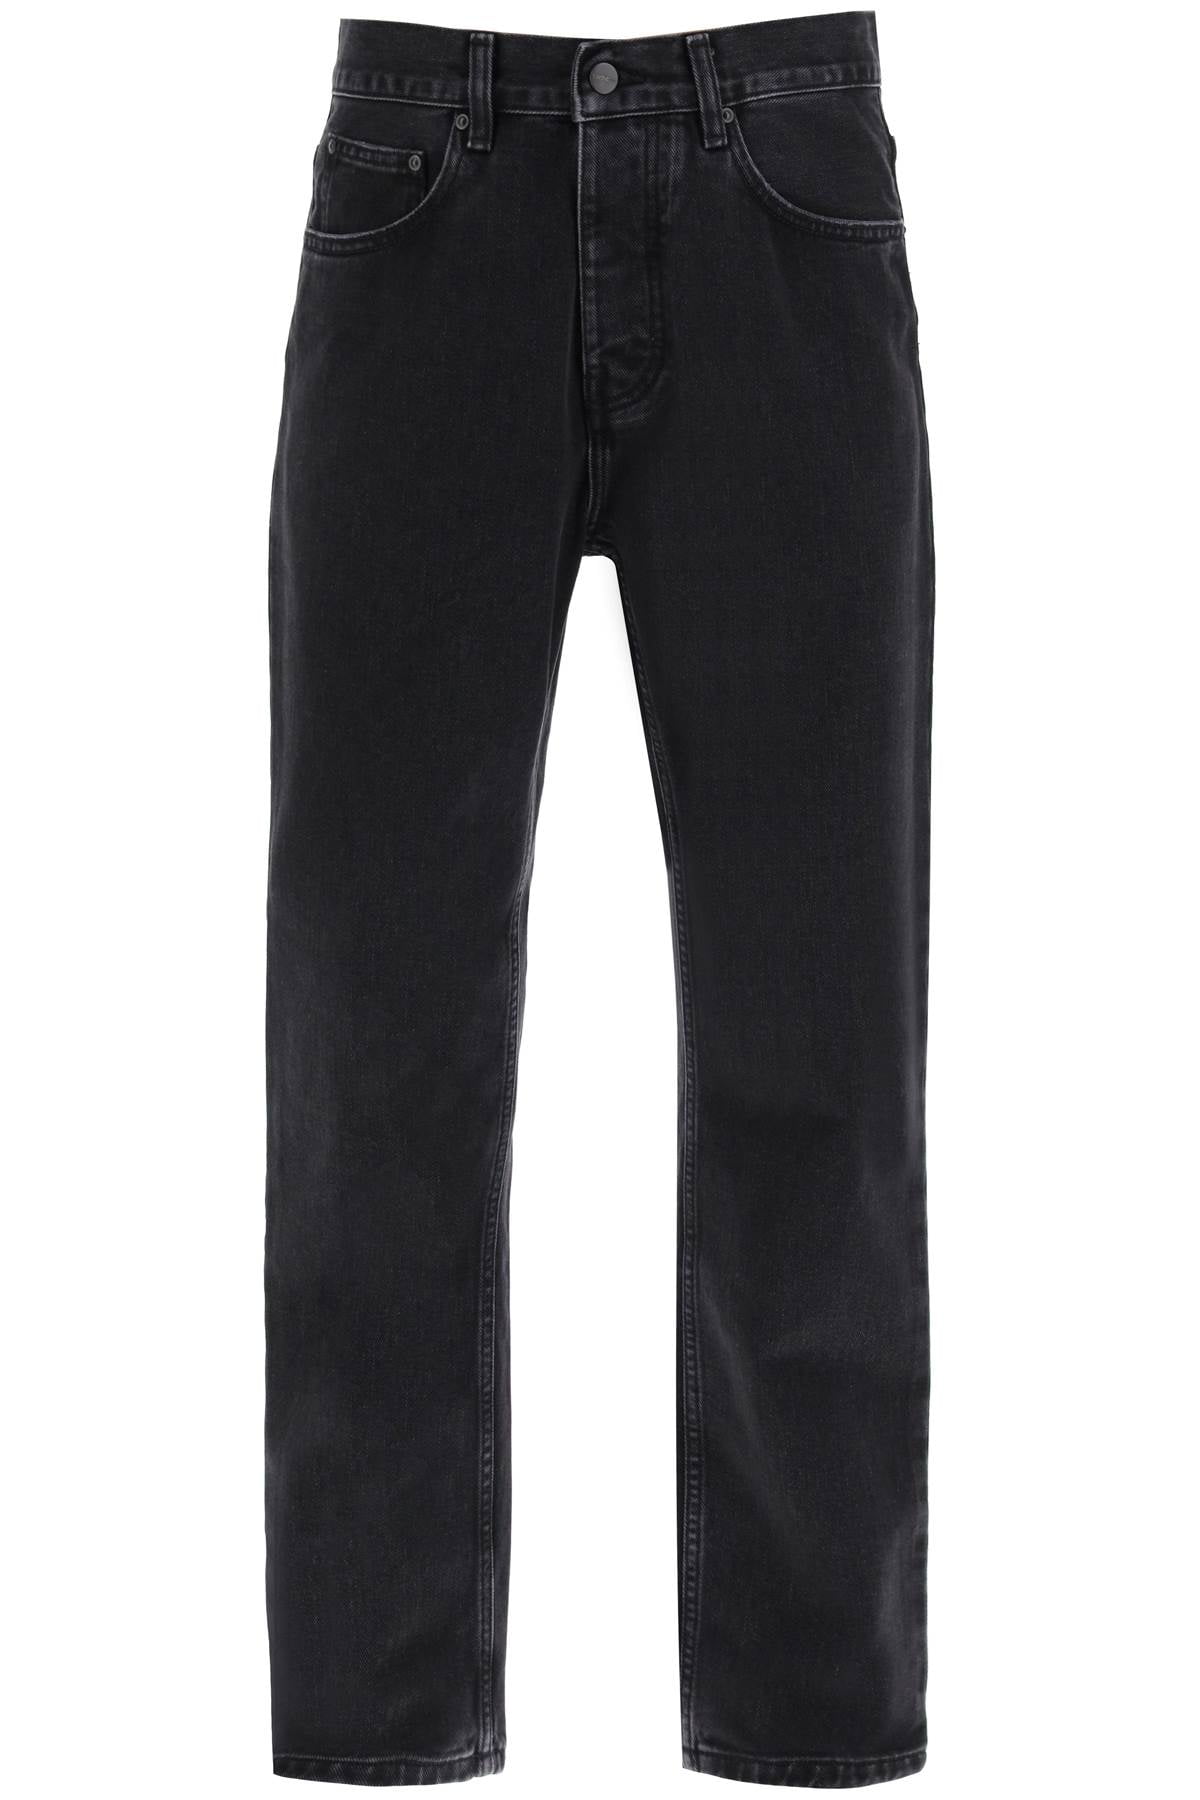 Carhartt Wip Organic Denim Loose Jeans Men - Walmart.com